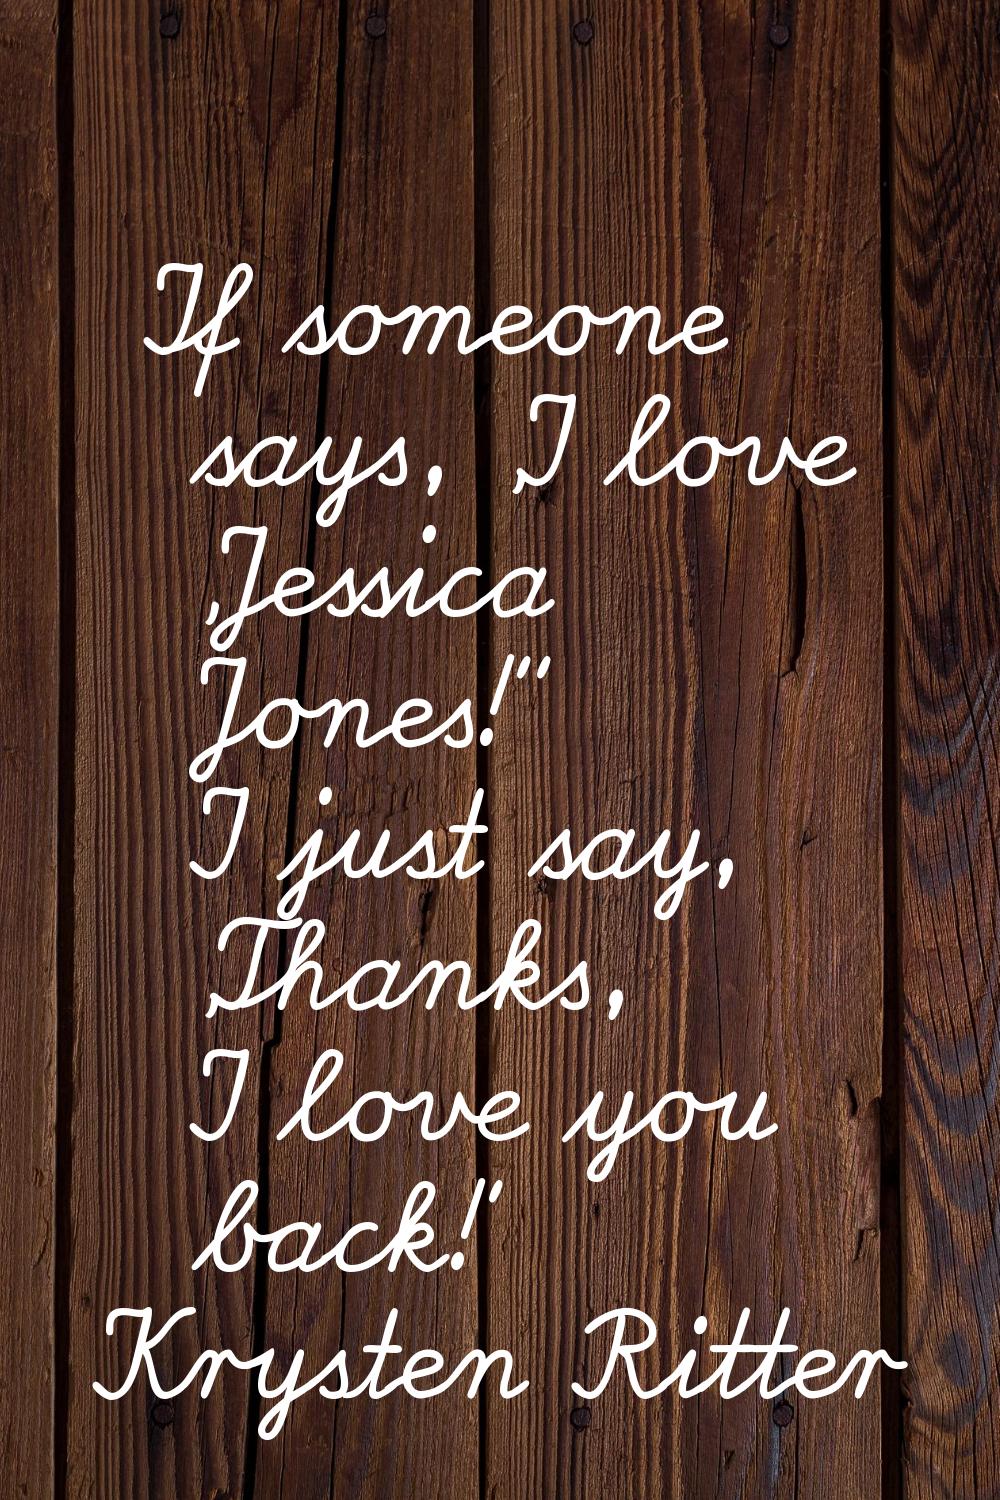 If someone says, 'I love 'Jessica Jones!'' I just say, 'Thanks, I love you back!'